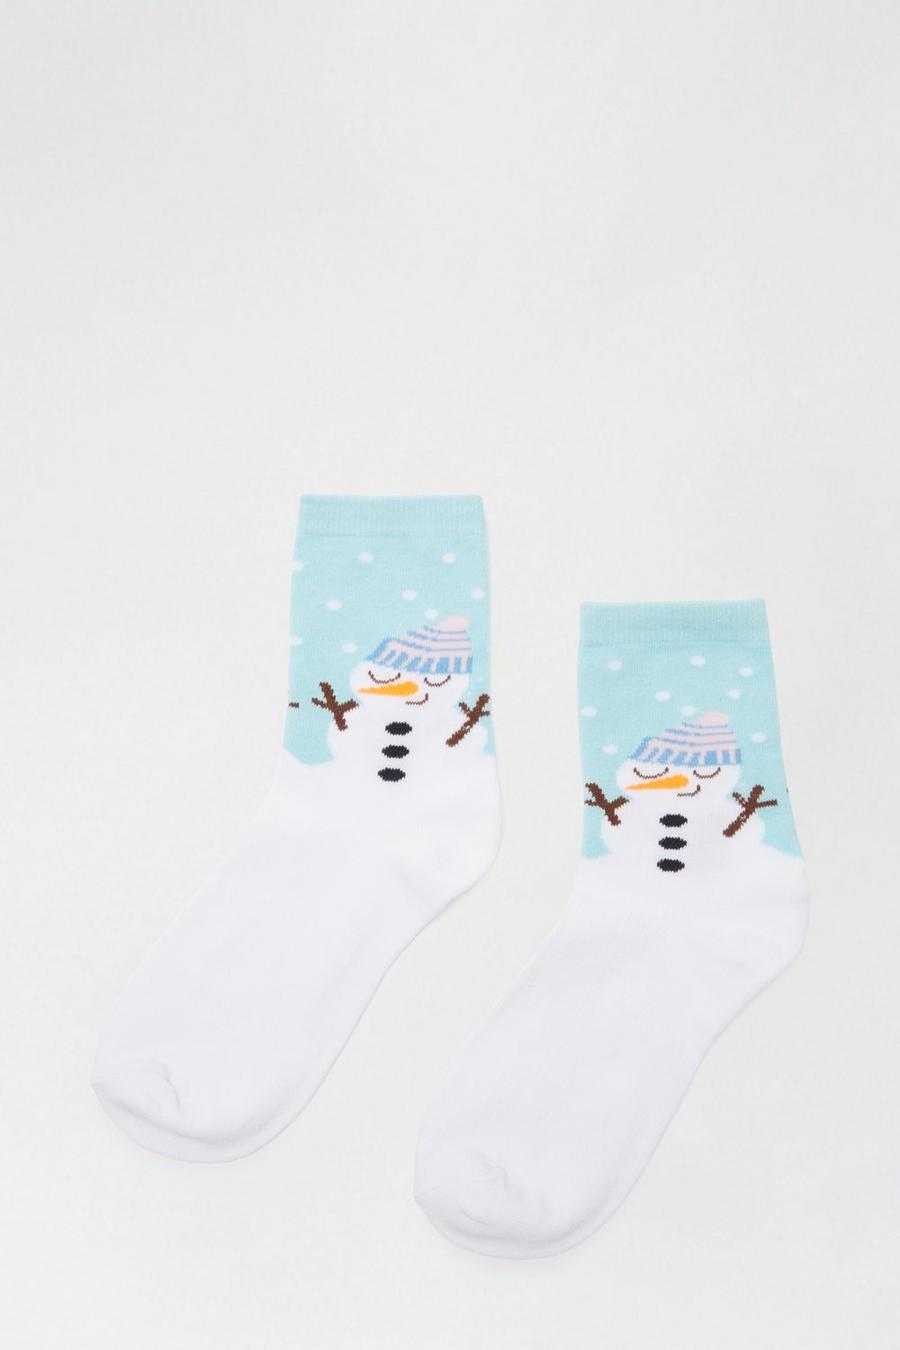 Mint Snow Man Socks